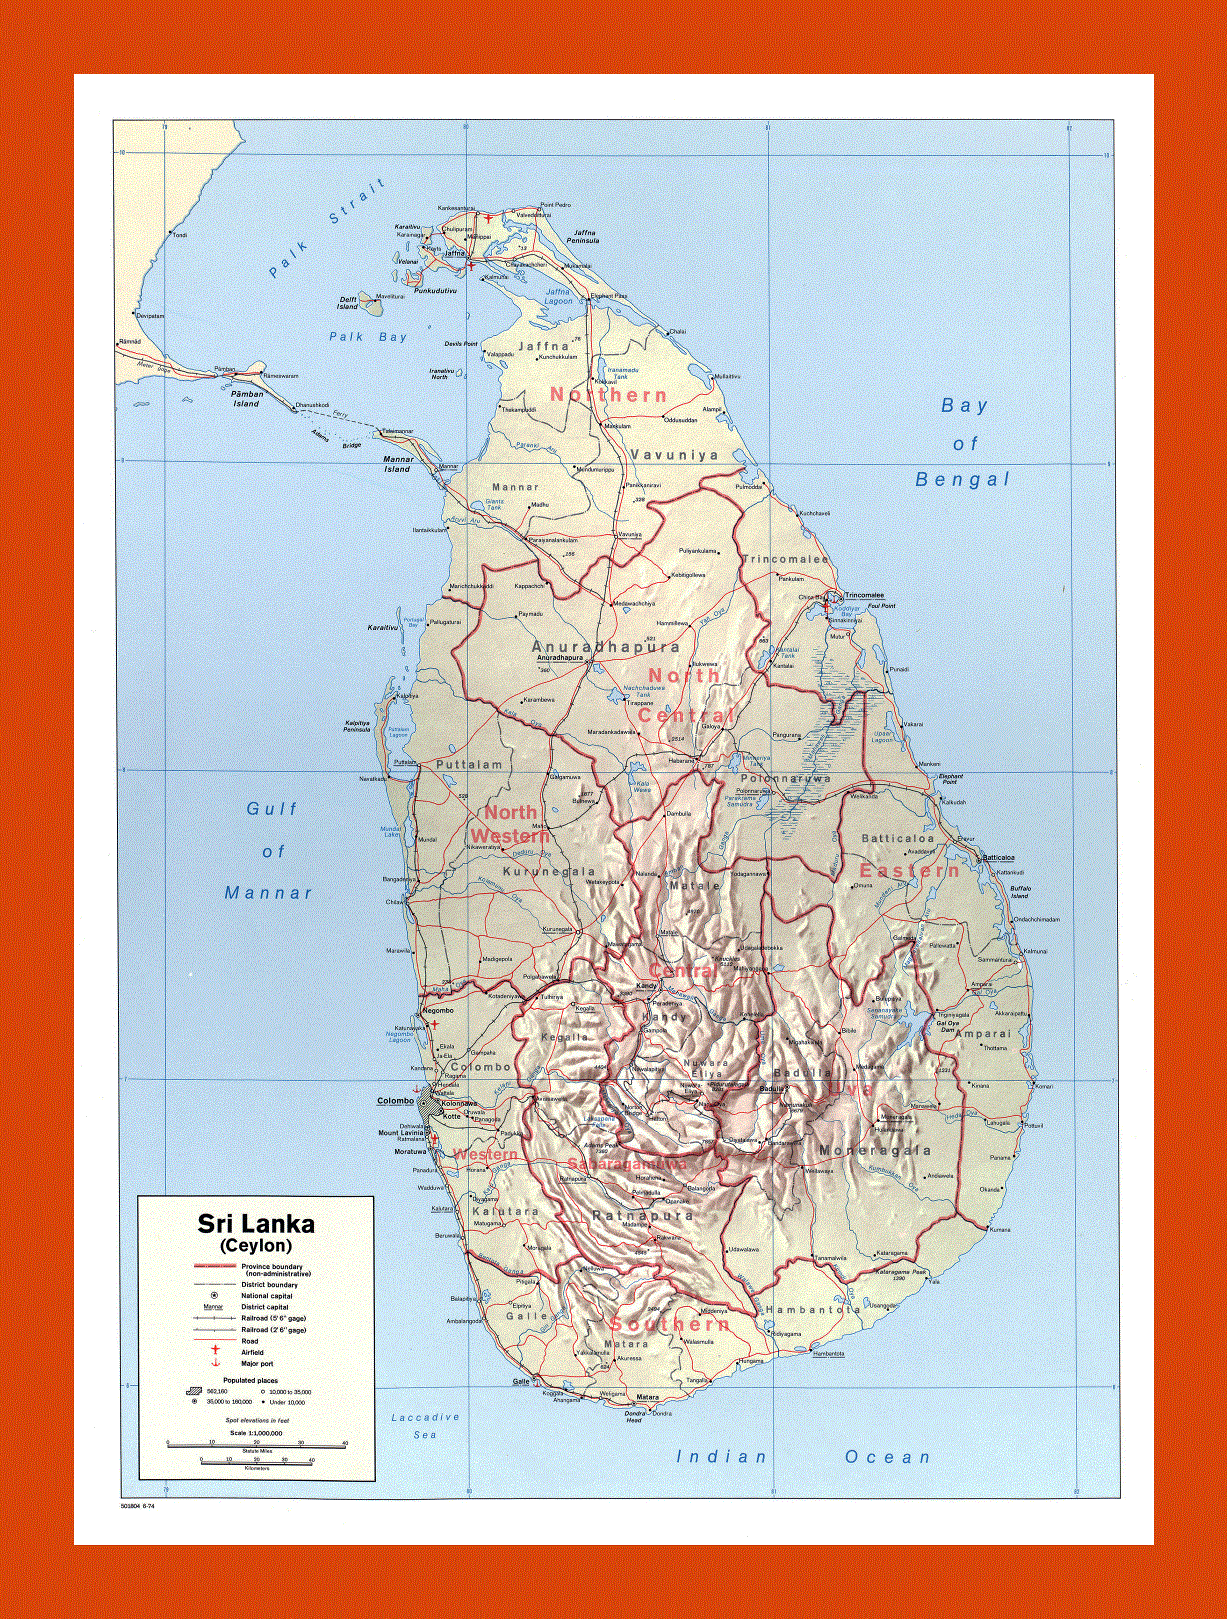 Political and administrative map of Sri Lanka - 1974